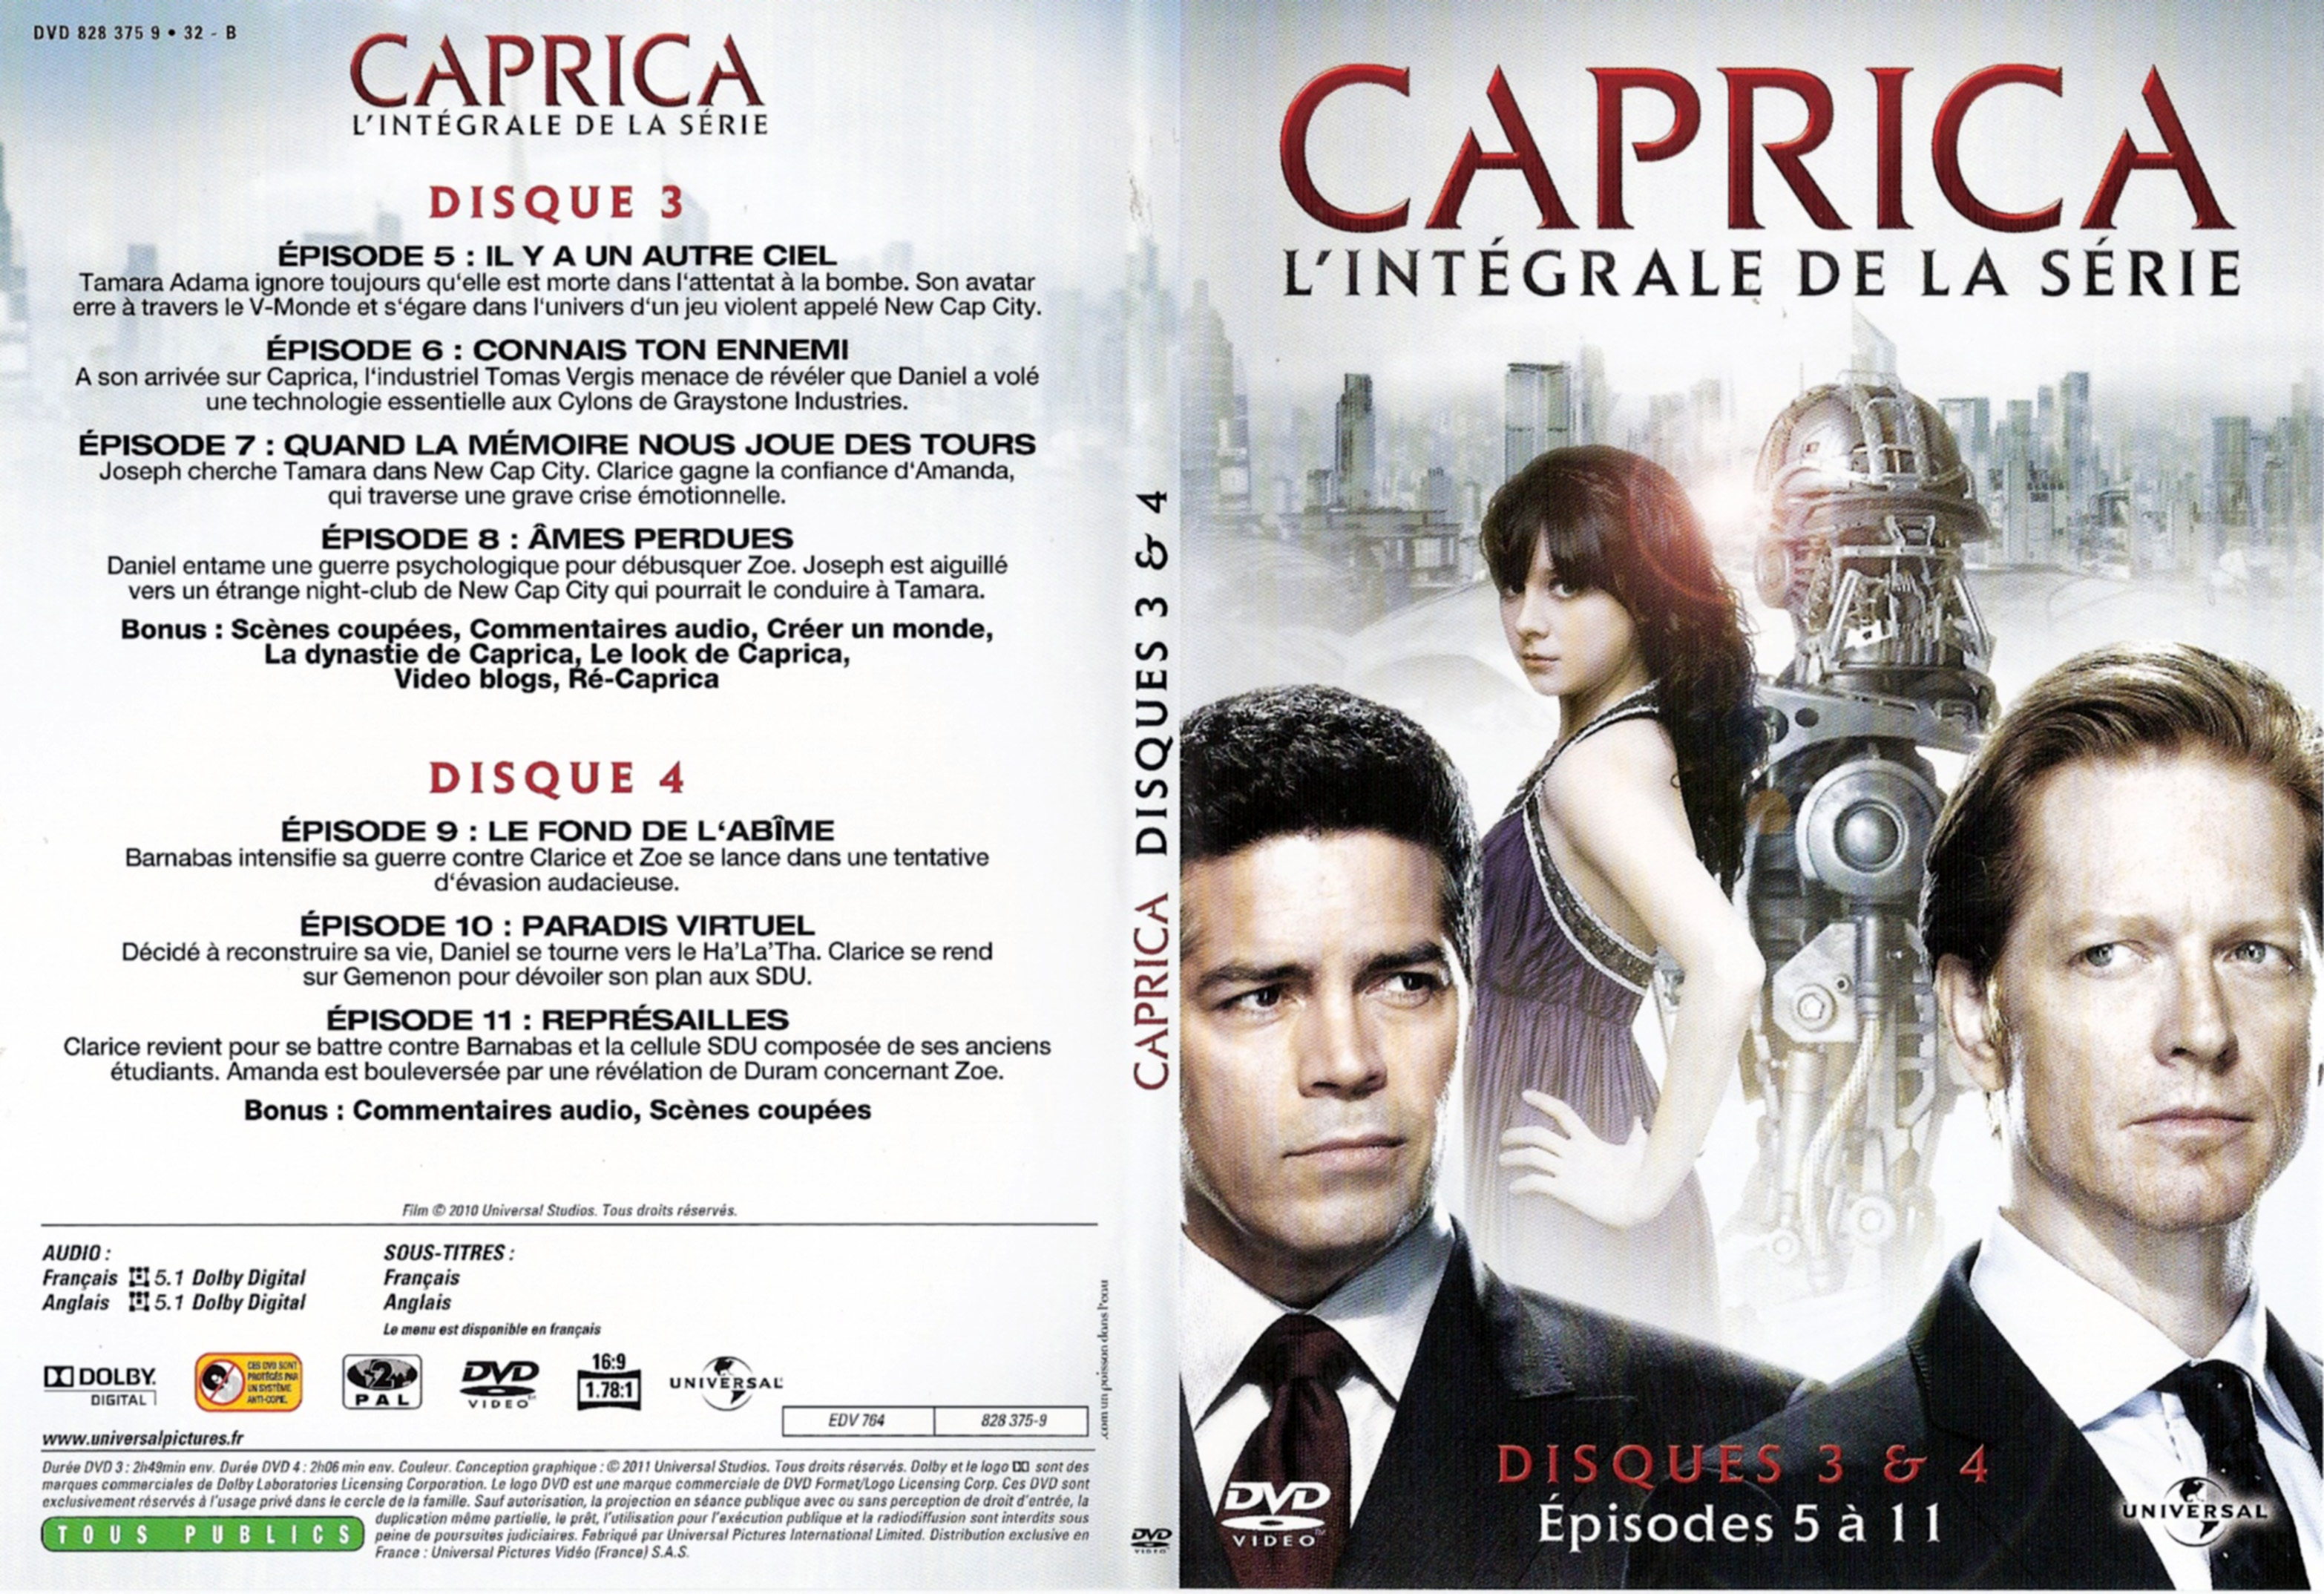 Jaquette DVD Caprica DVD 2